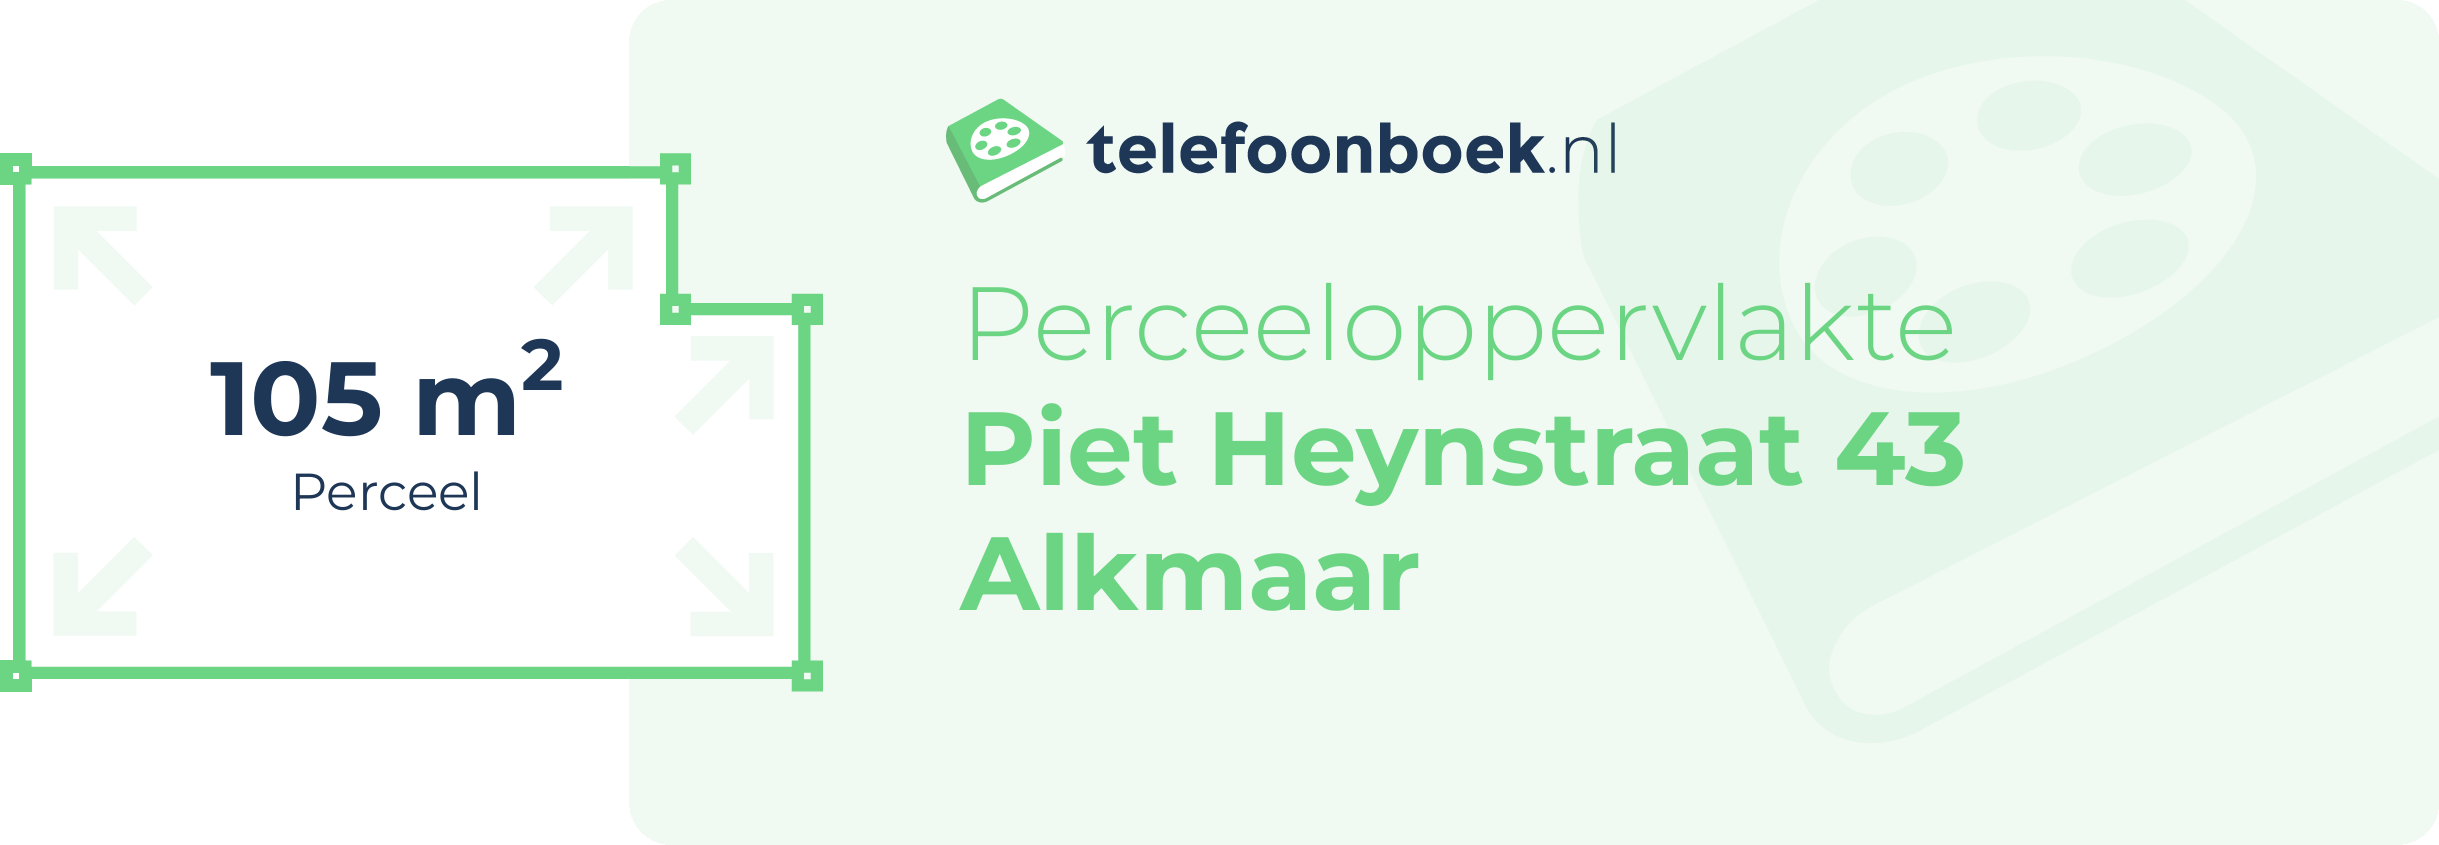 Perceeloppervlakte Piet Heynstraat 43 Alkmaar